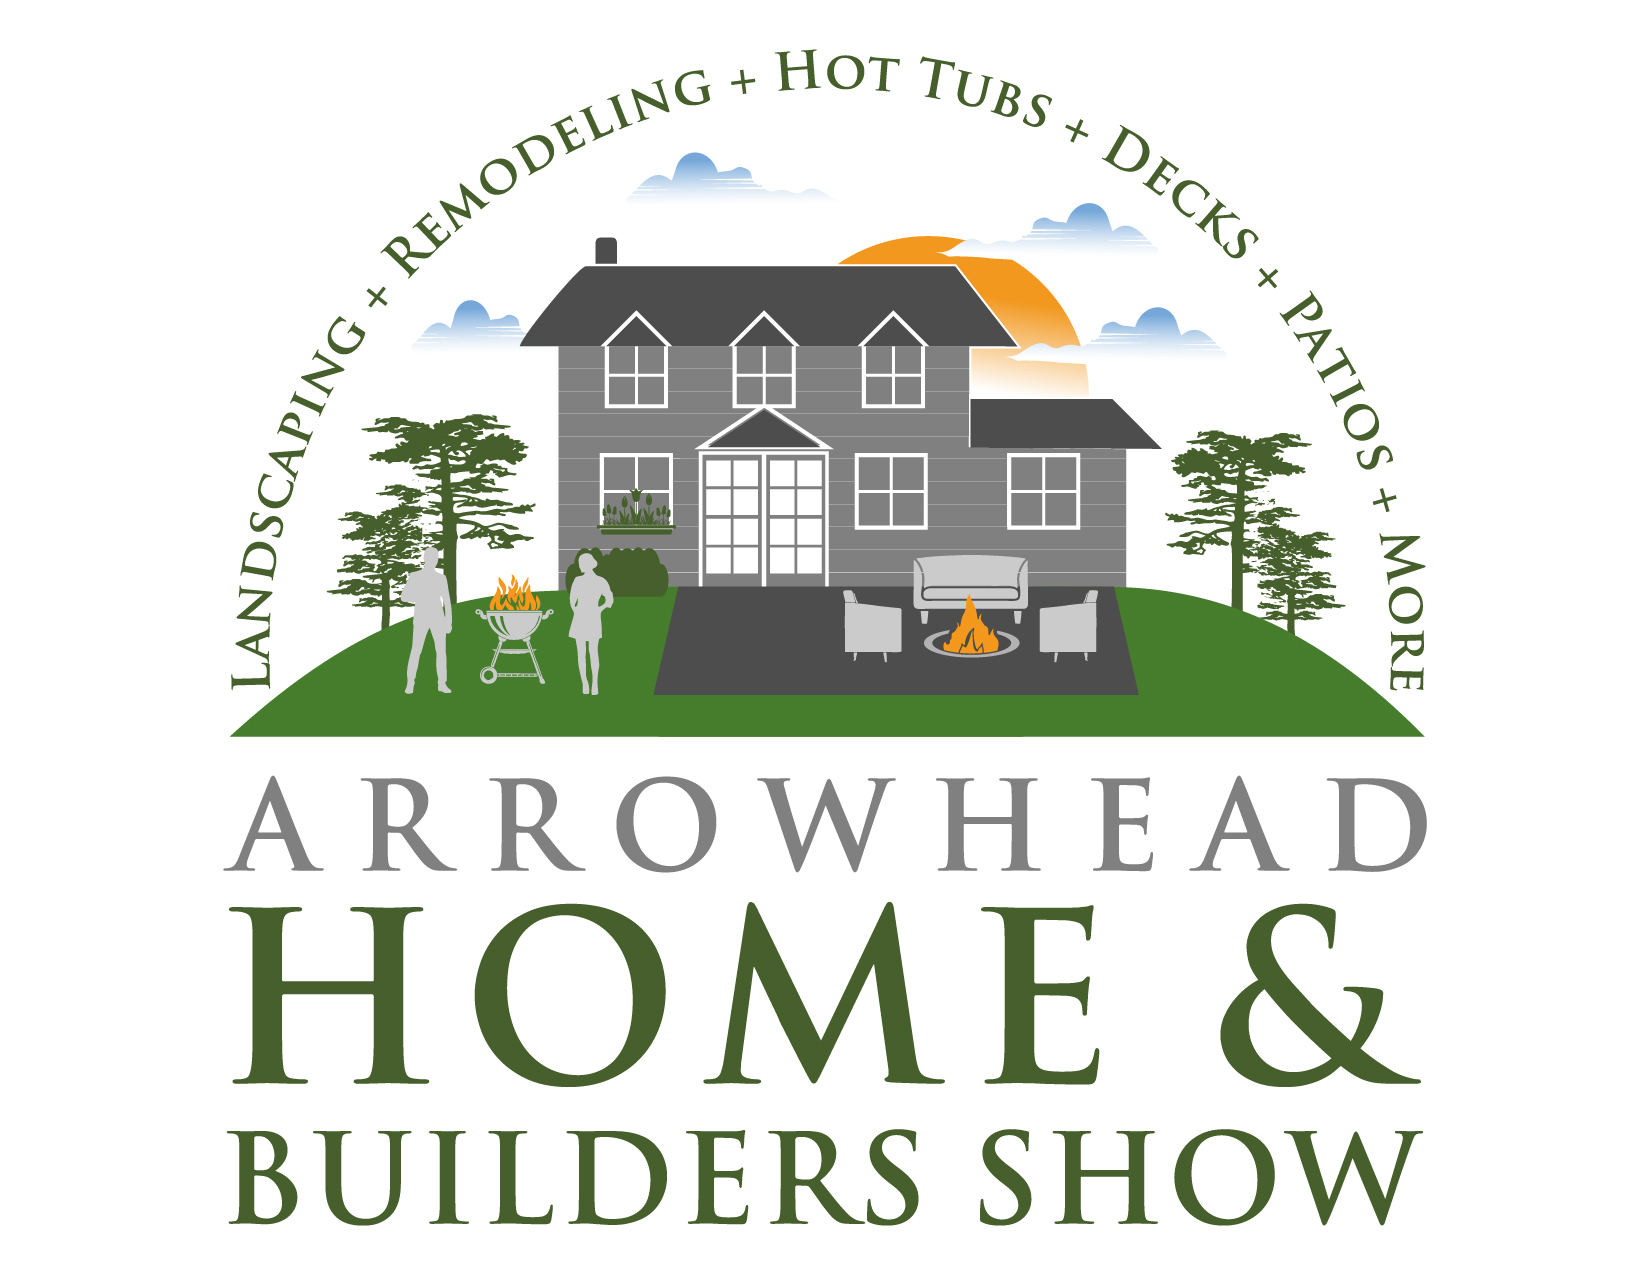 Arrowhead Home & Builders Show • Visit Duluth